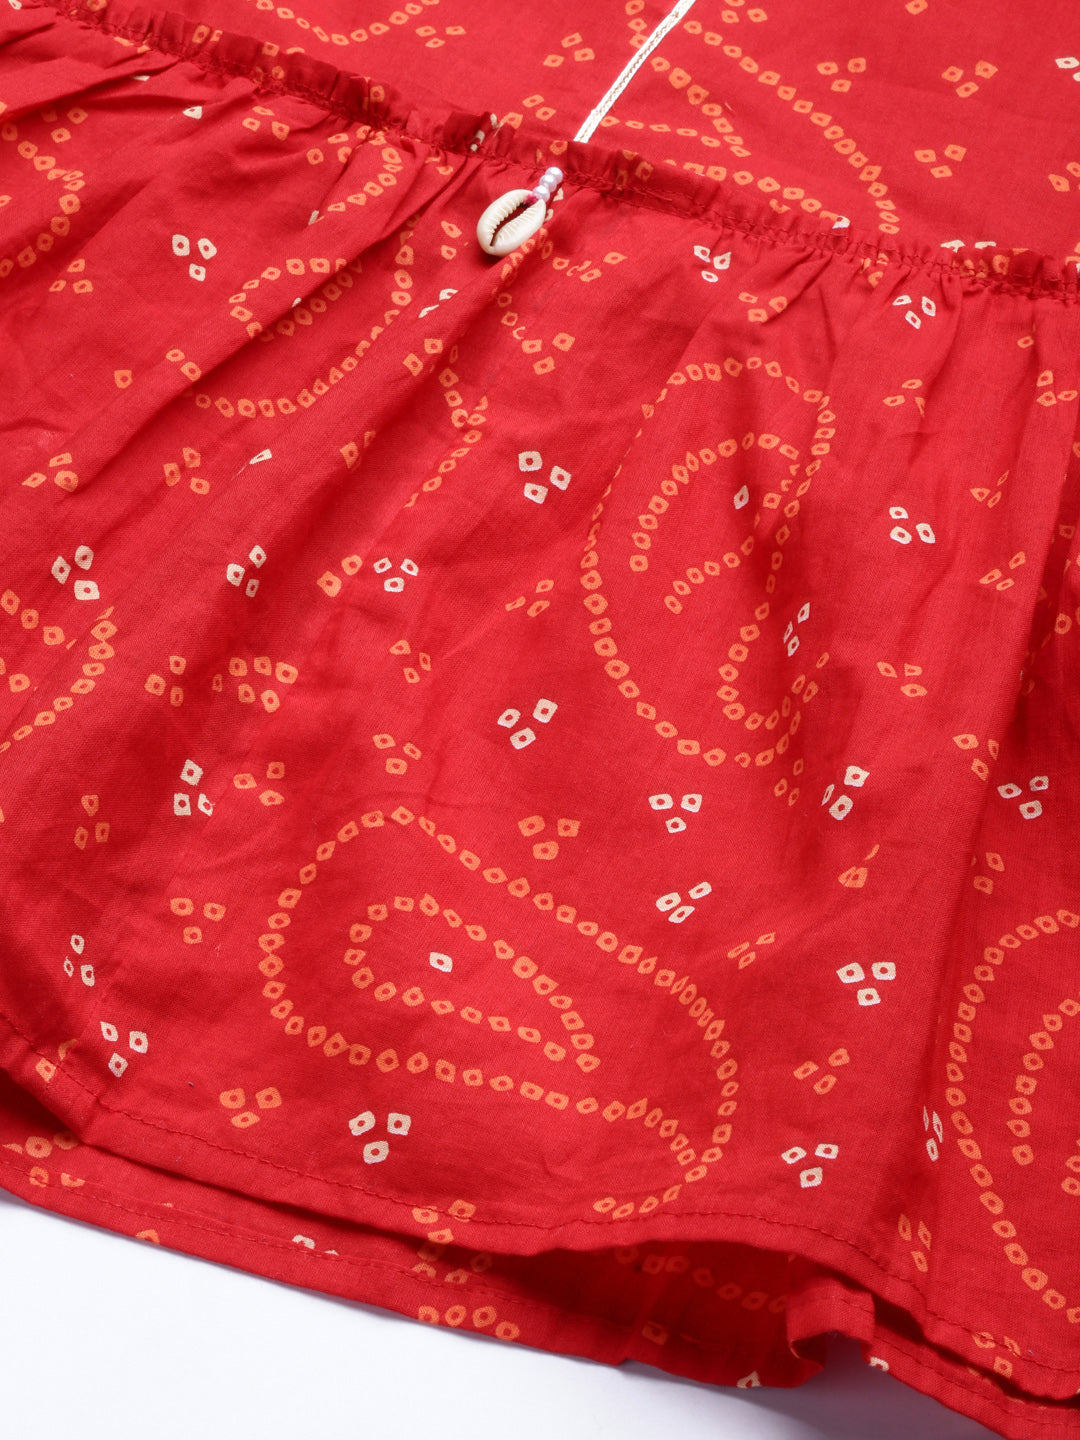 Ishin Women's Cotton Red Bandhani Print Embellished Crop Top With Skirt